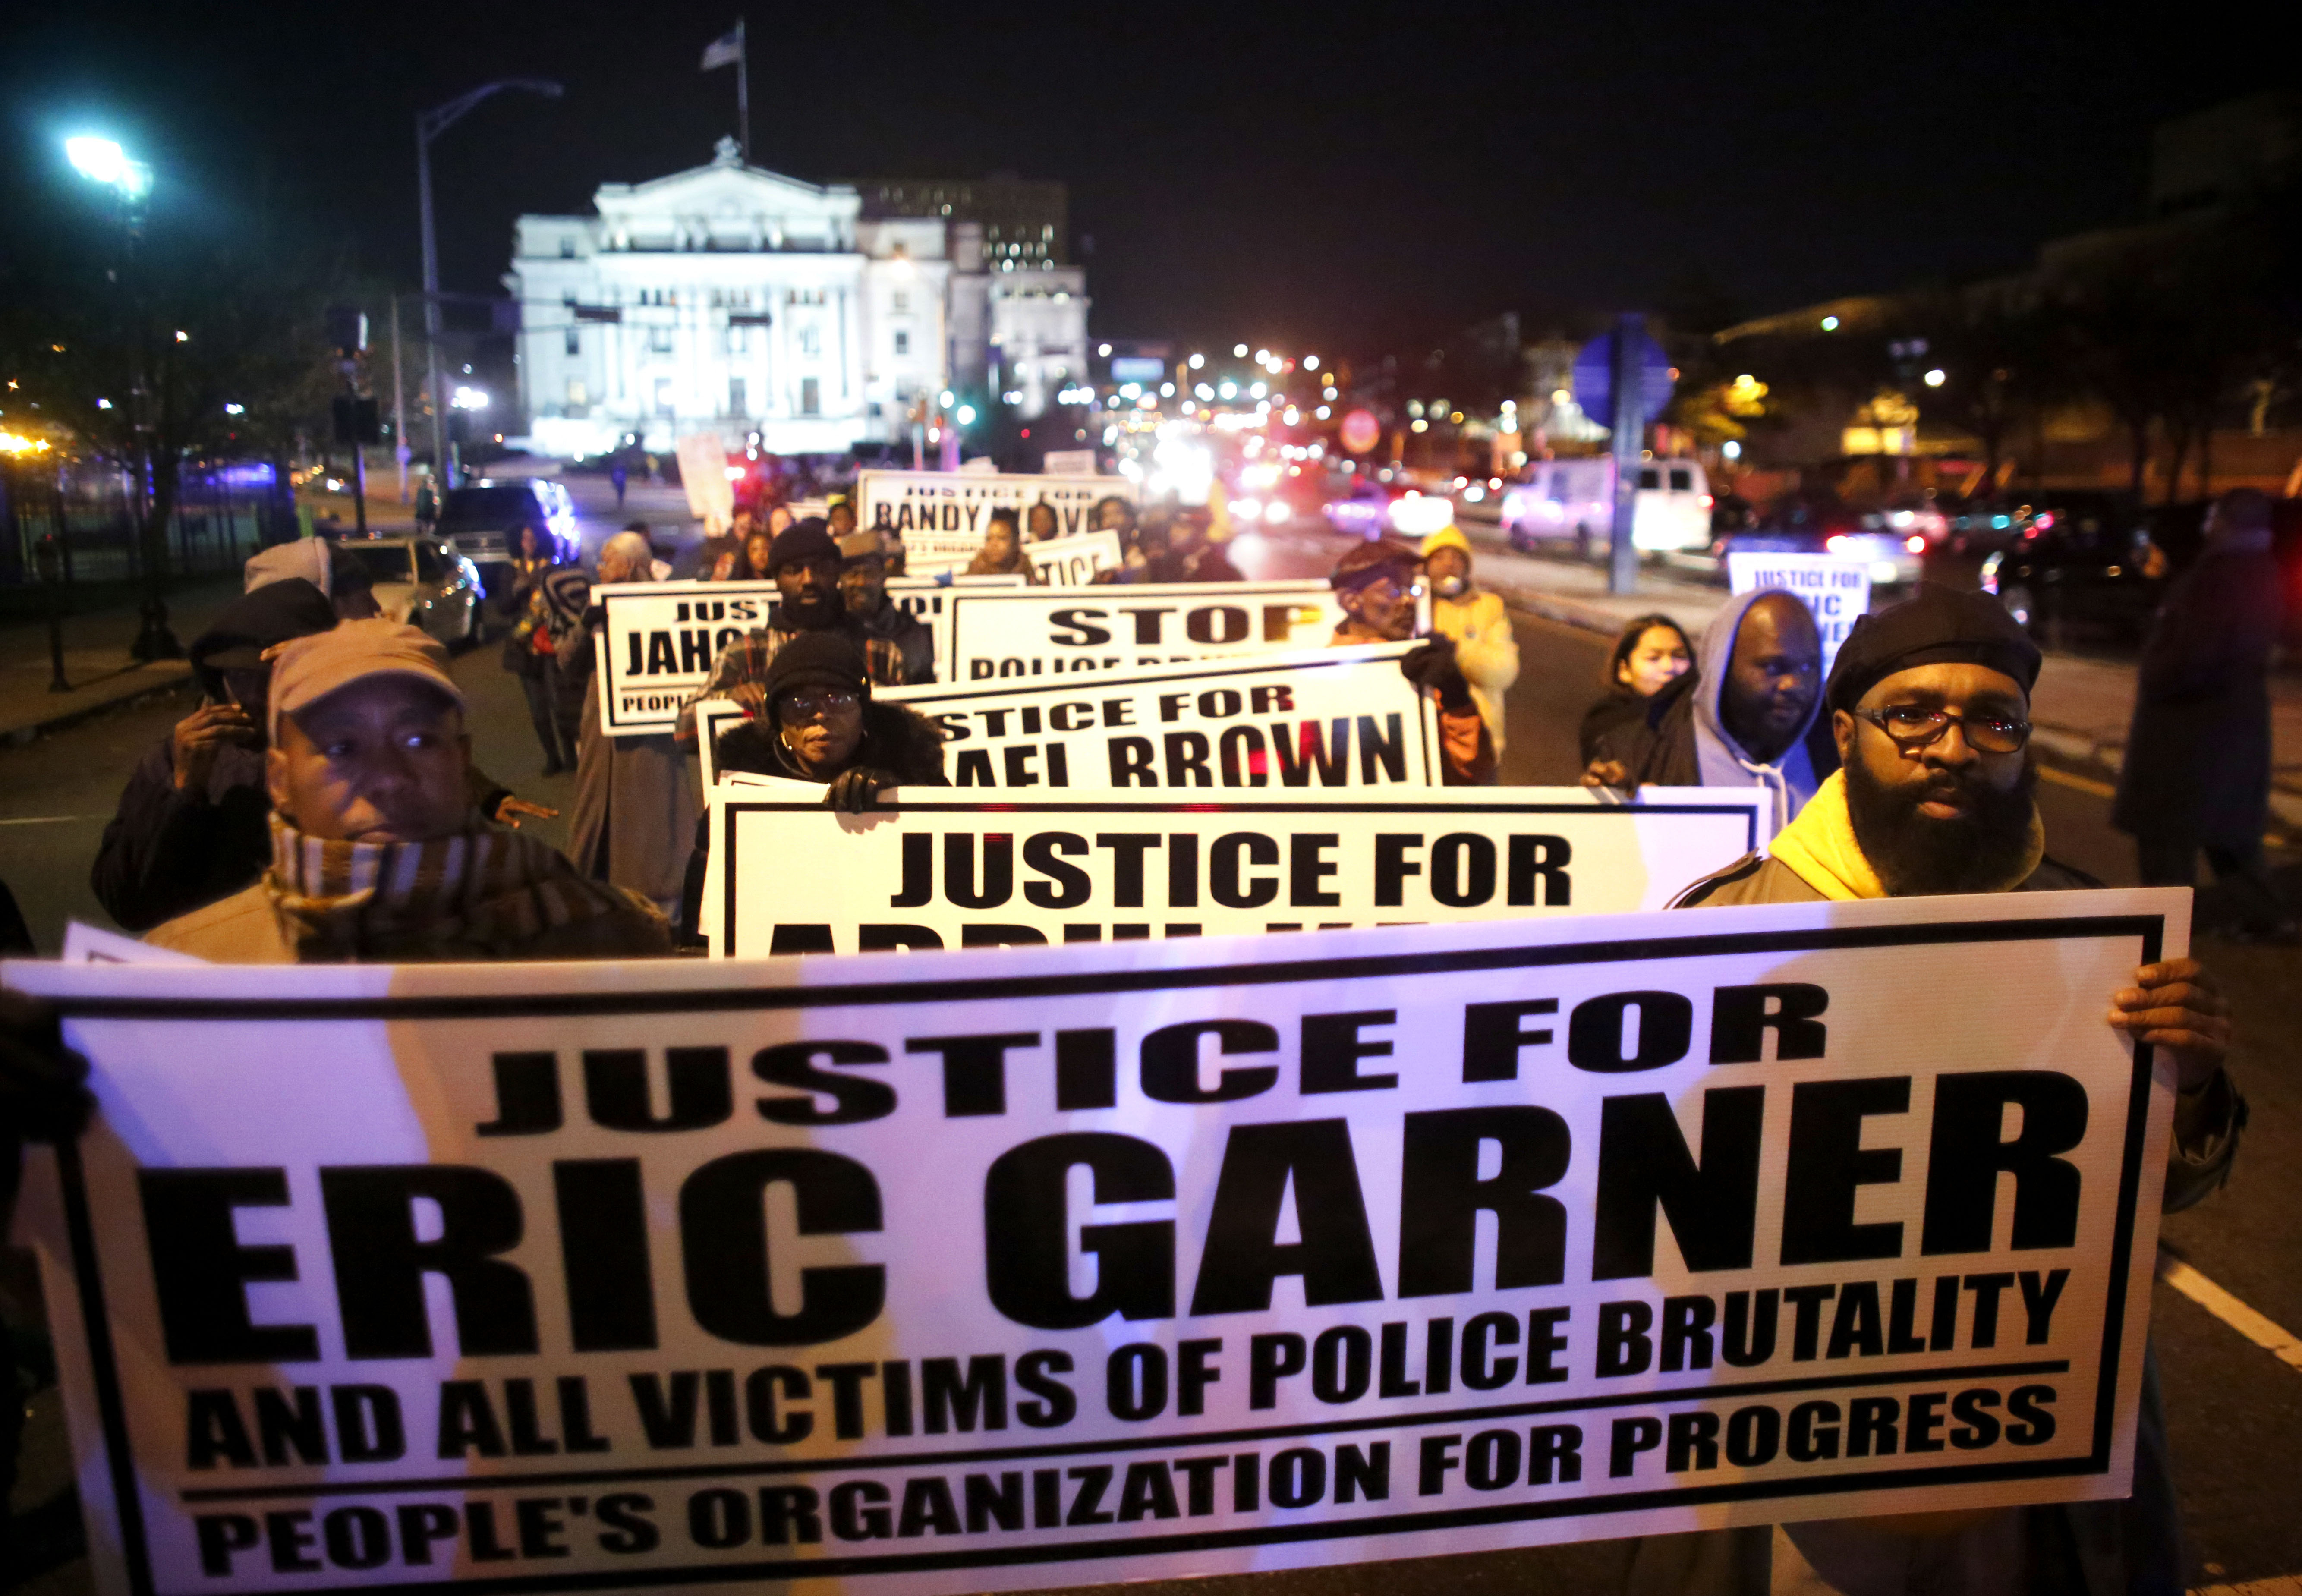 "Justice for Eric Gardner".